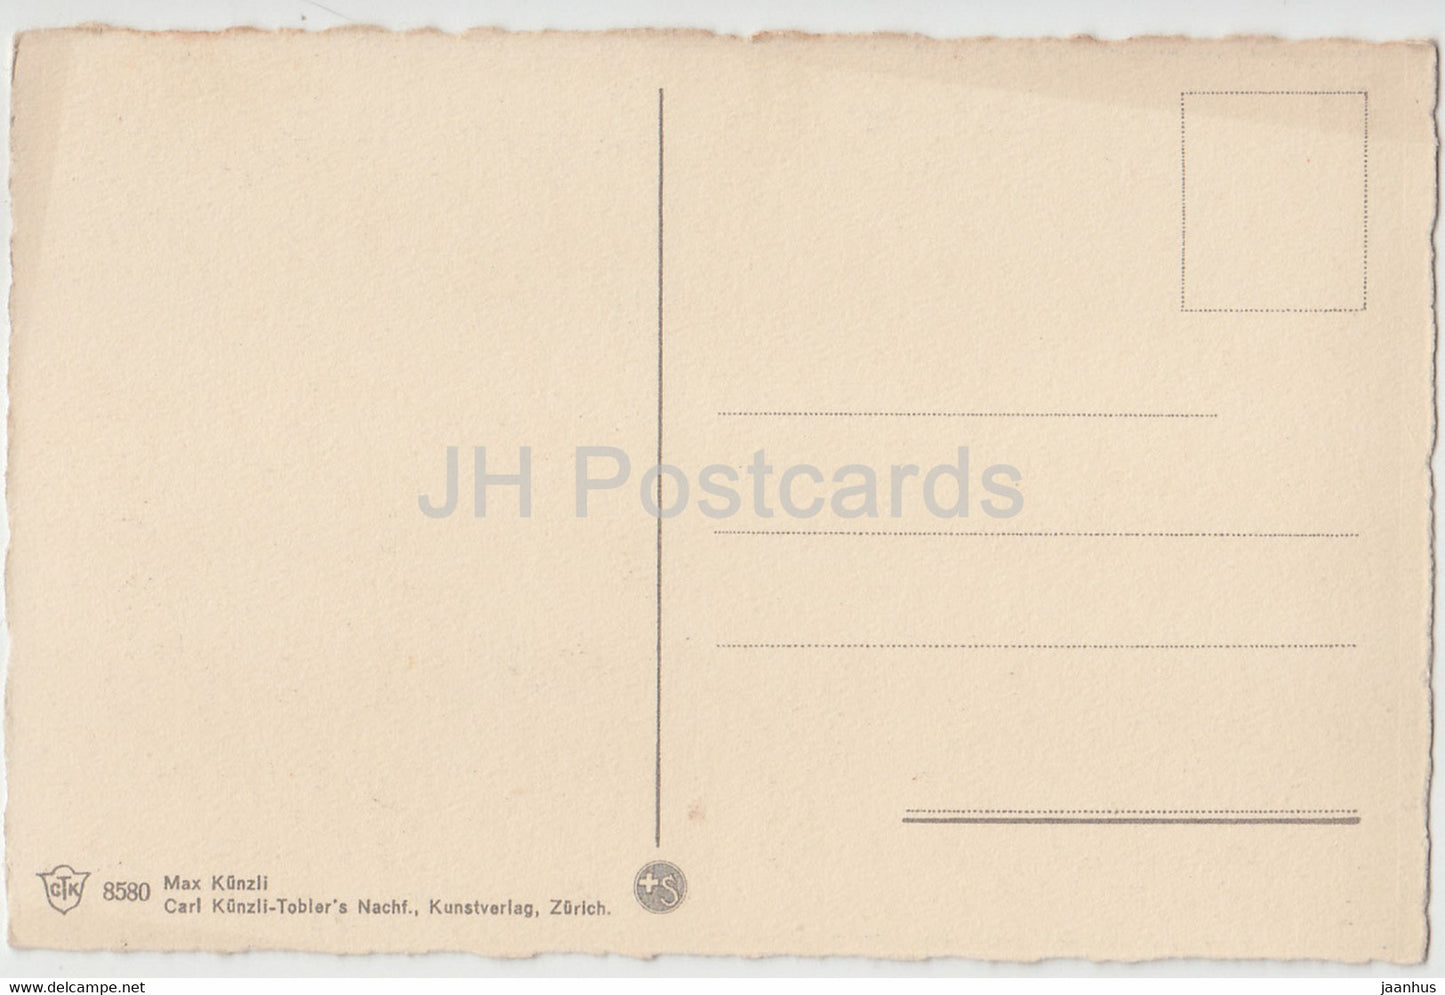 Locarno - 8580 - carte postale ancienne - Suisse - inutilisée